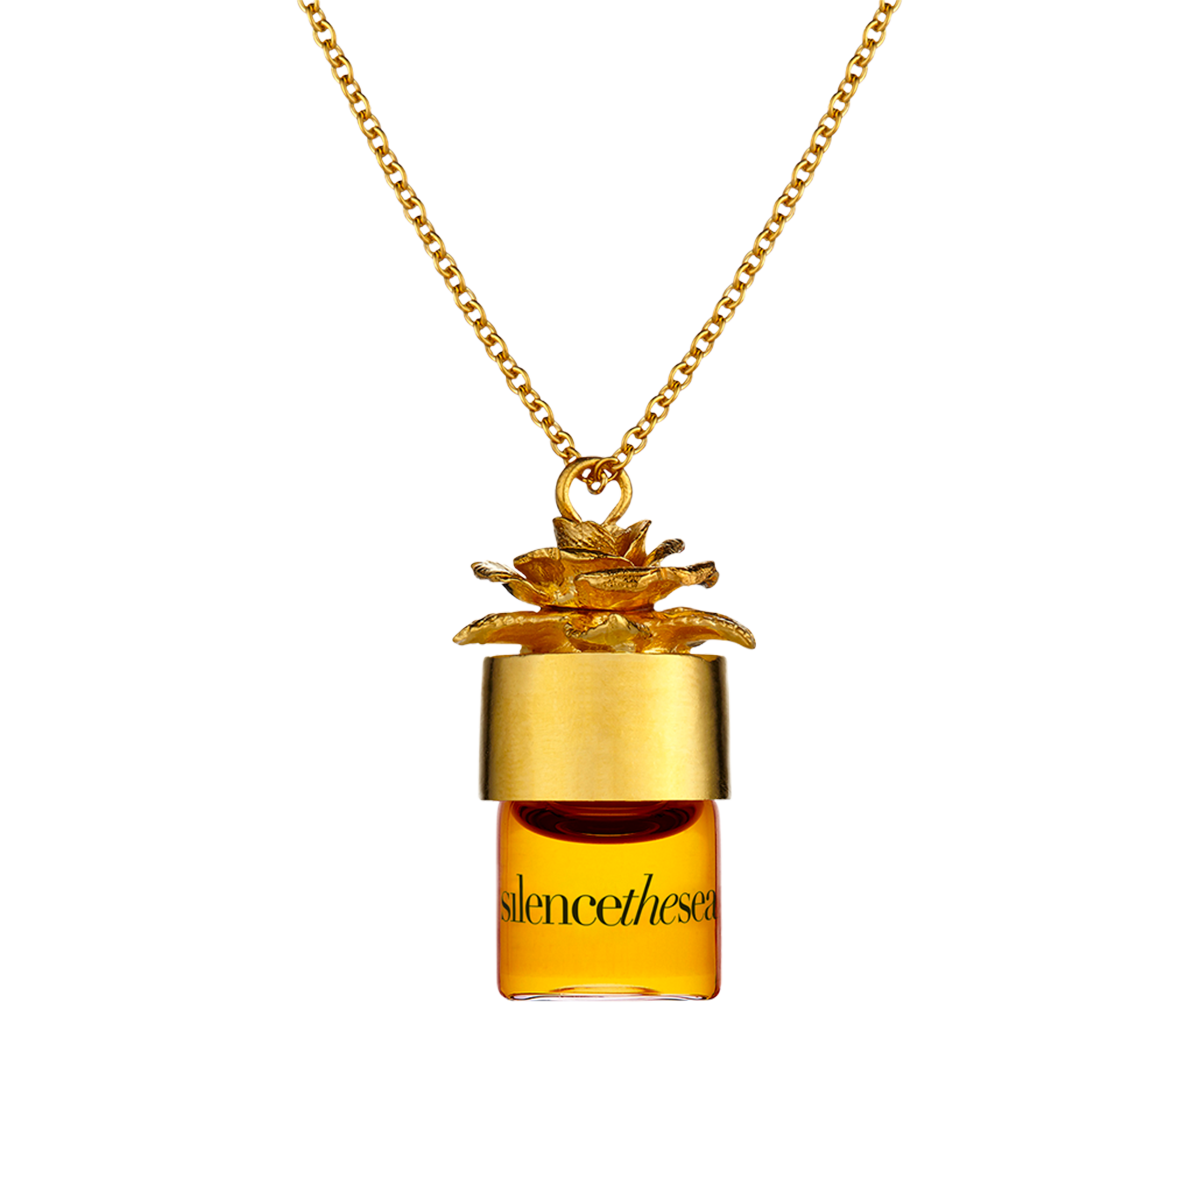 Strangelove - Silencethesea oil 24" potion pendant